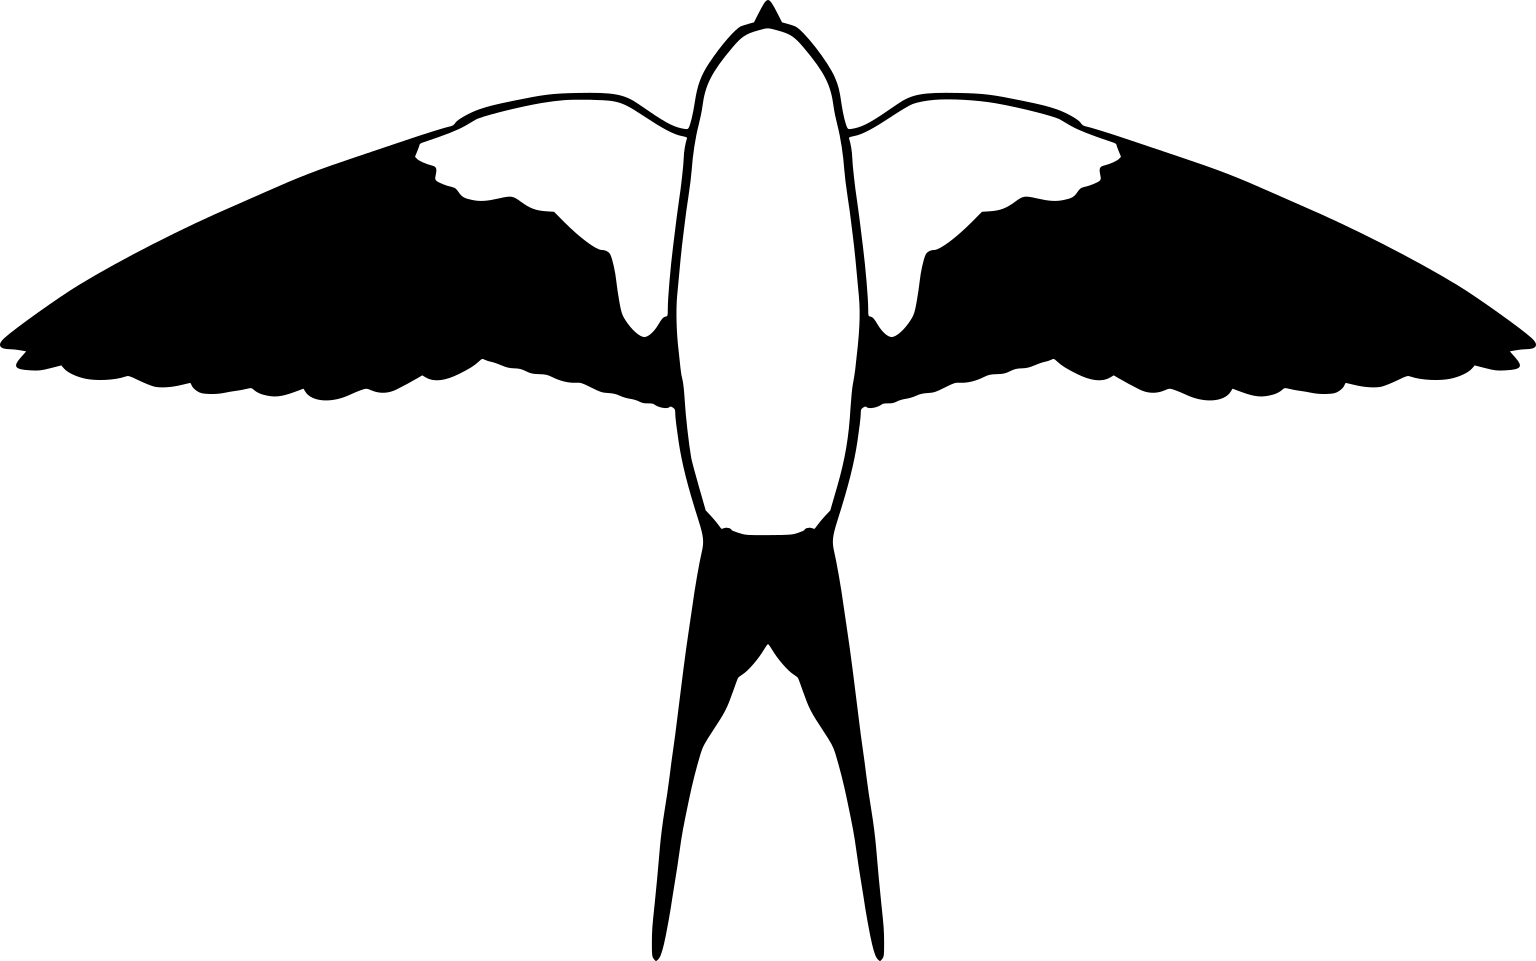 Cecropis daurica